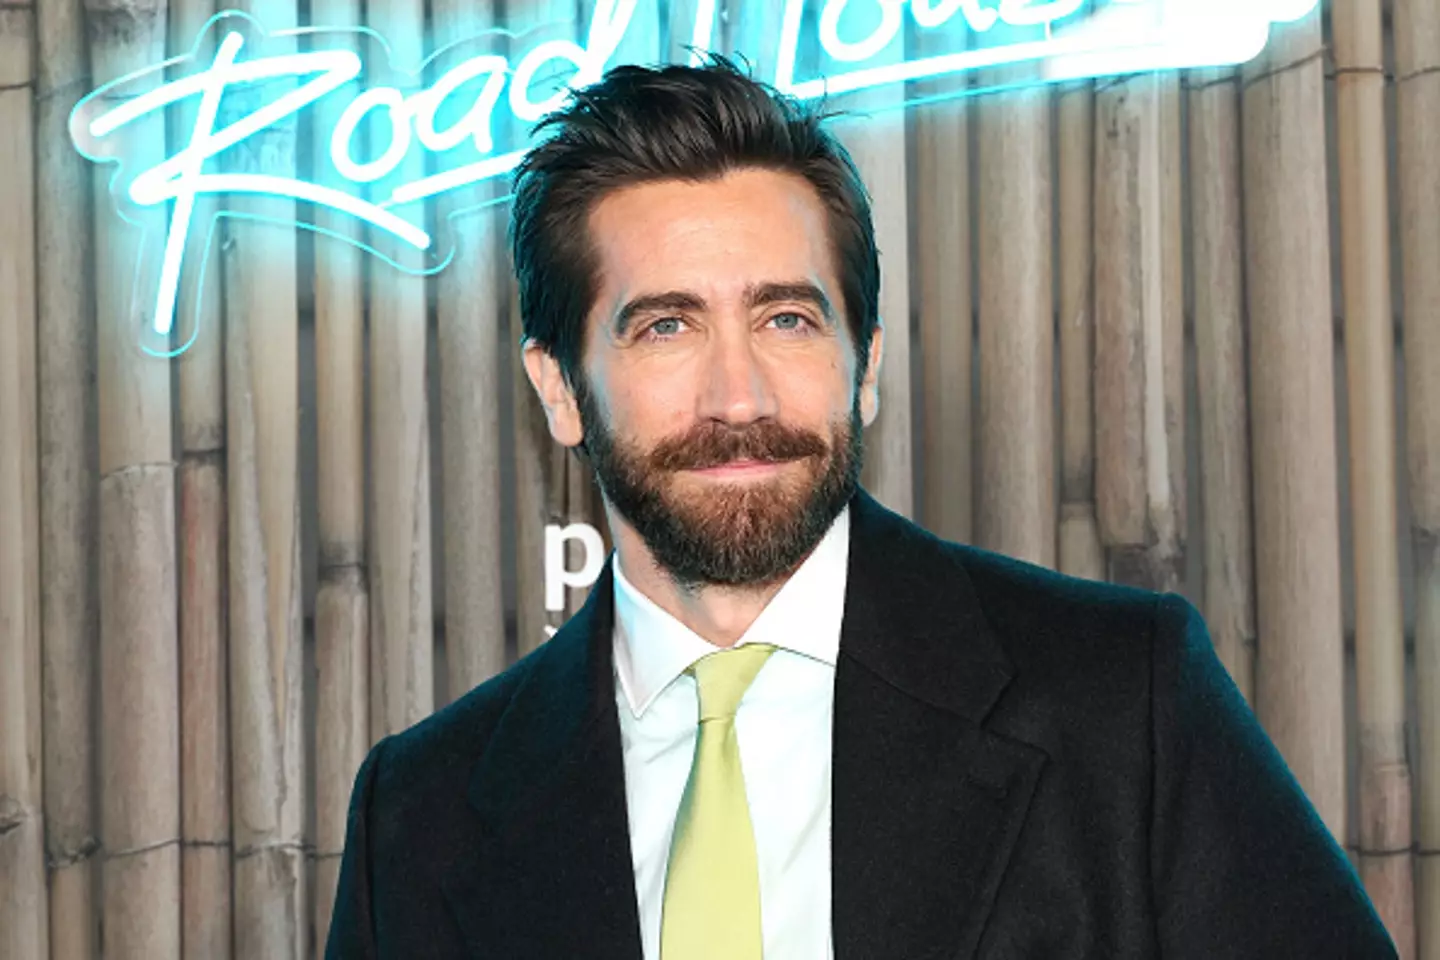 Jake Gyllenhaal admitted he films intimate scenes fully nude.